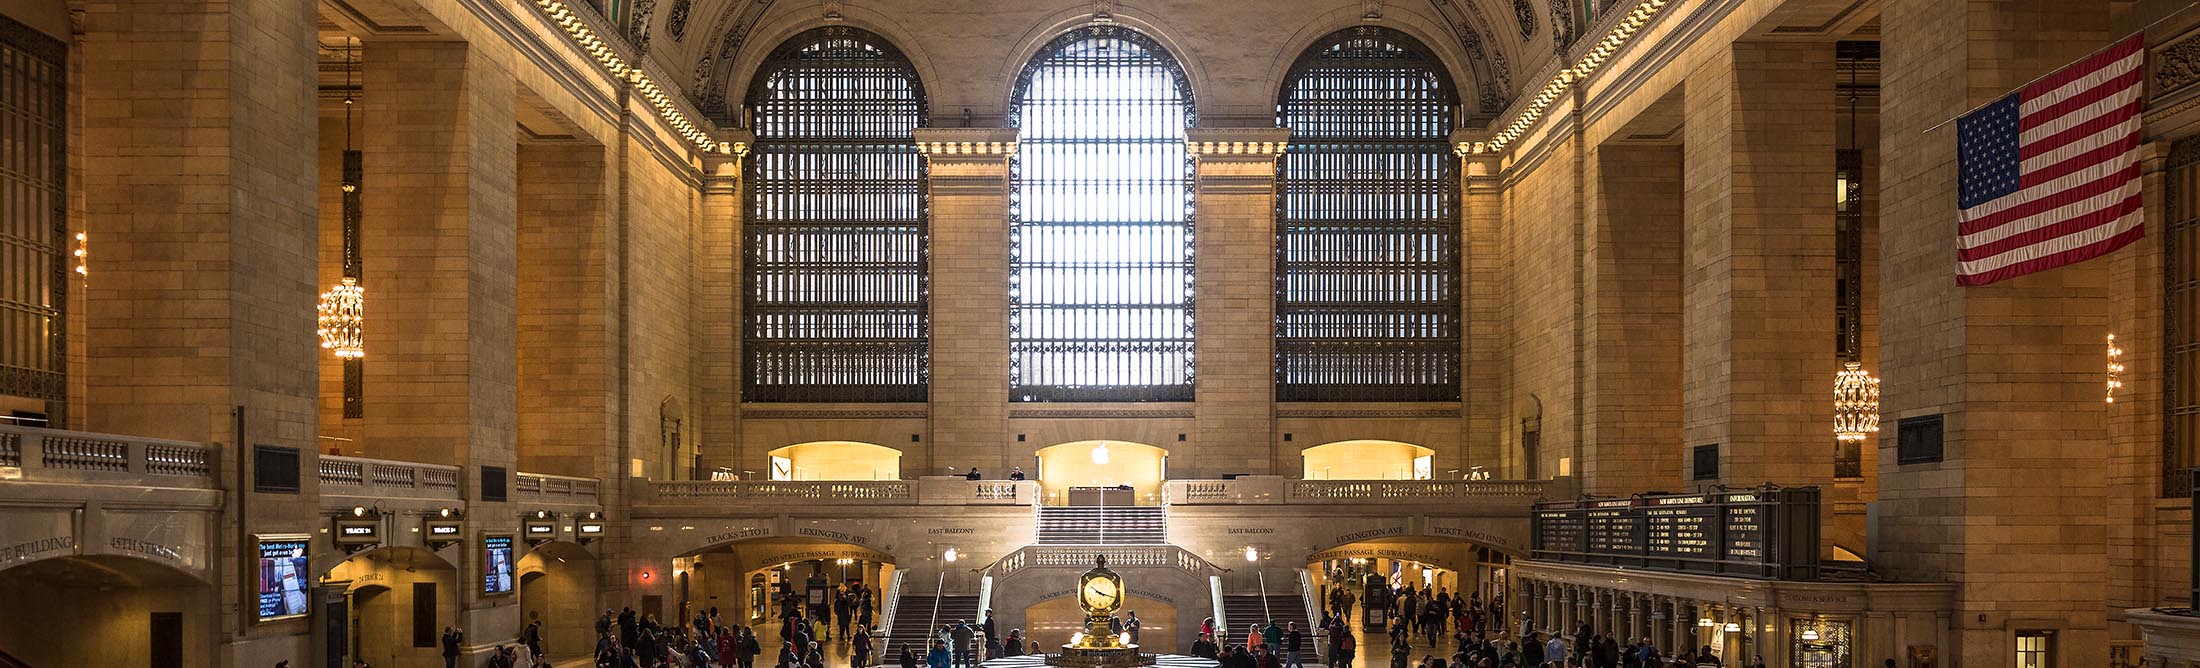 Secrets of Grand Central Station: Facts, History & Symbols